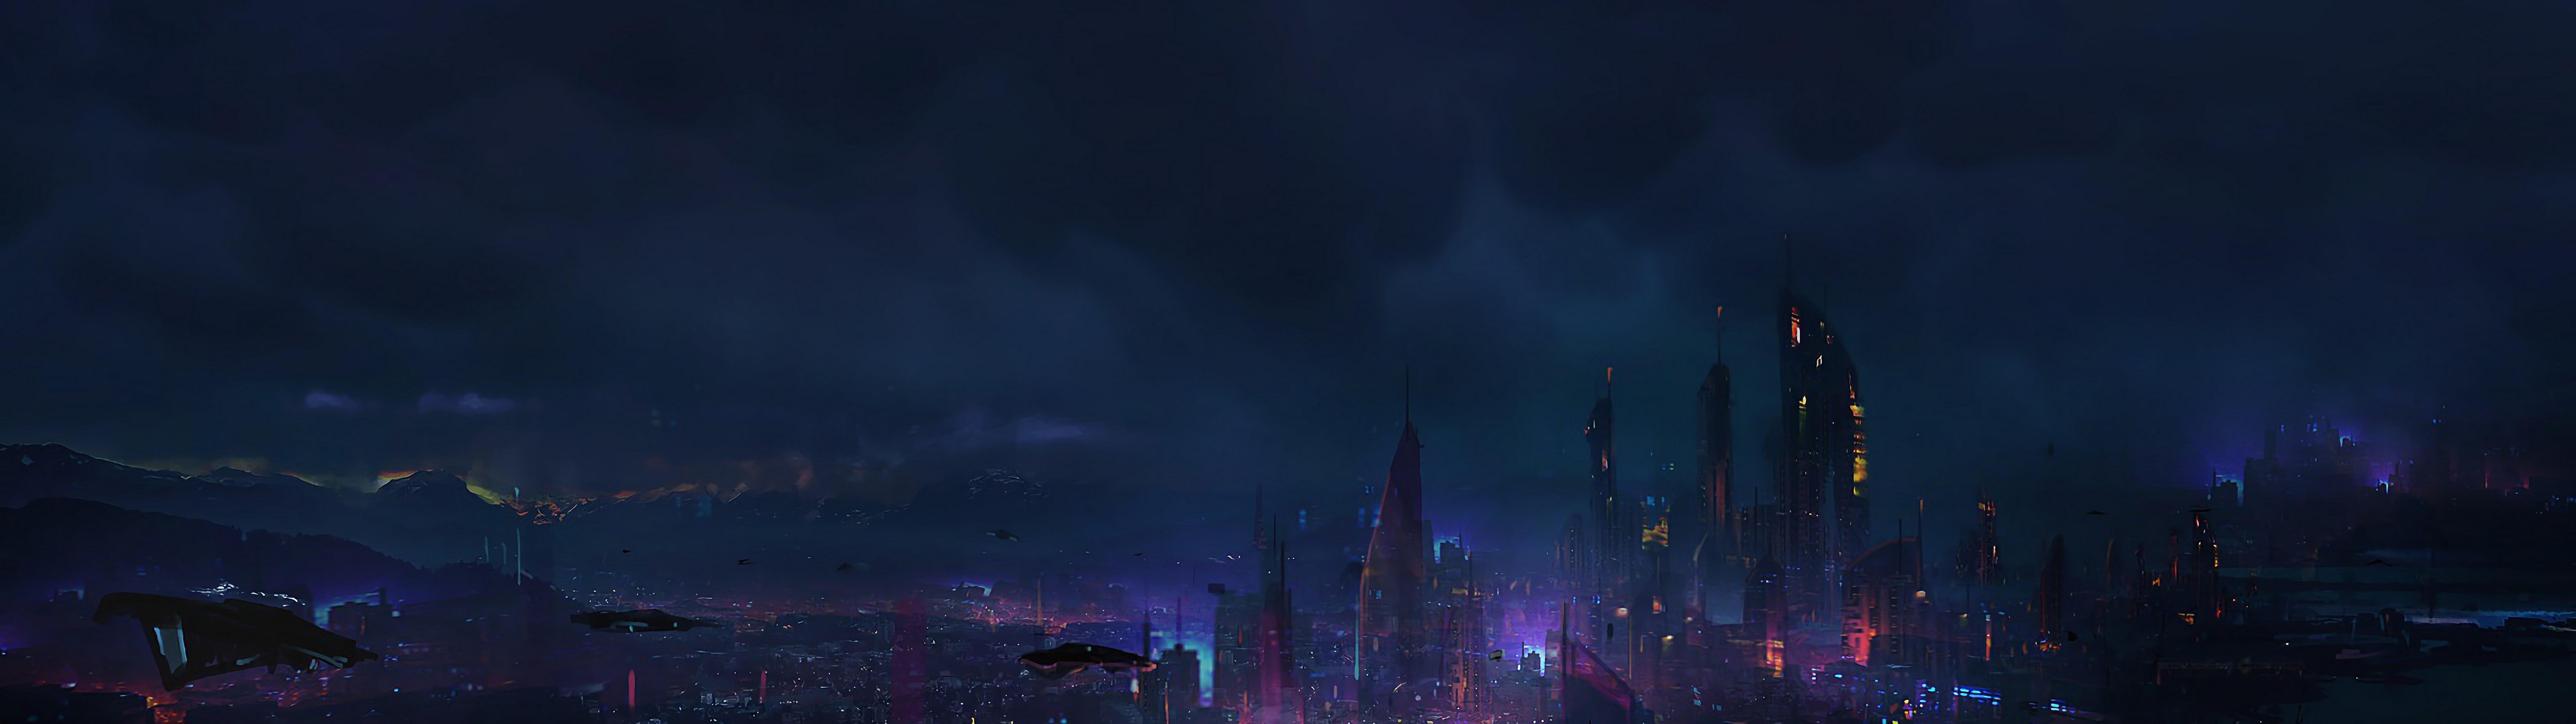 Cyberpunk City Night Scenery Sci Fi 4K